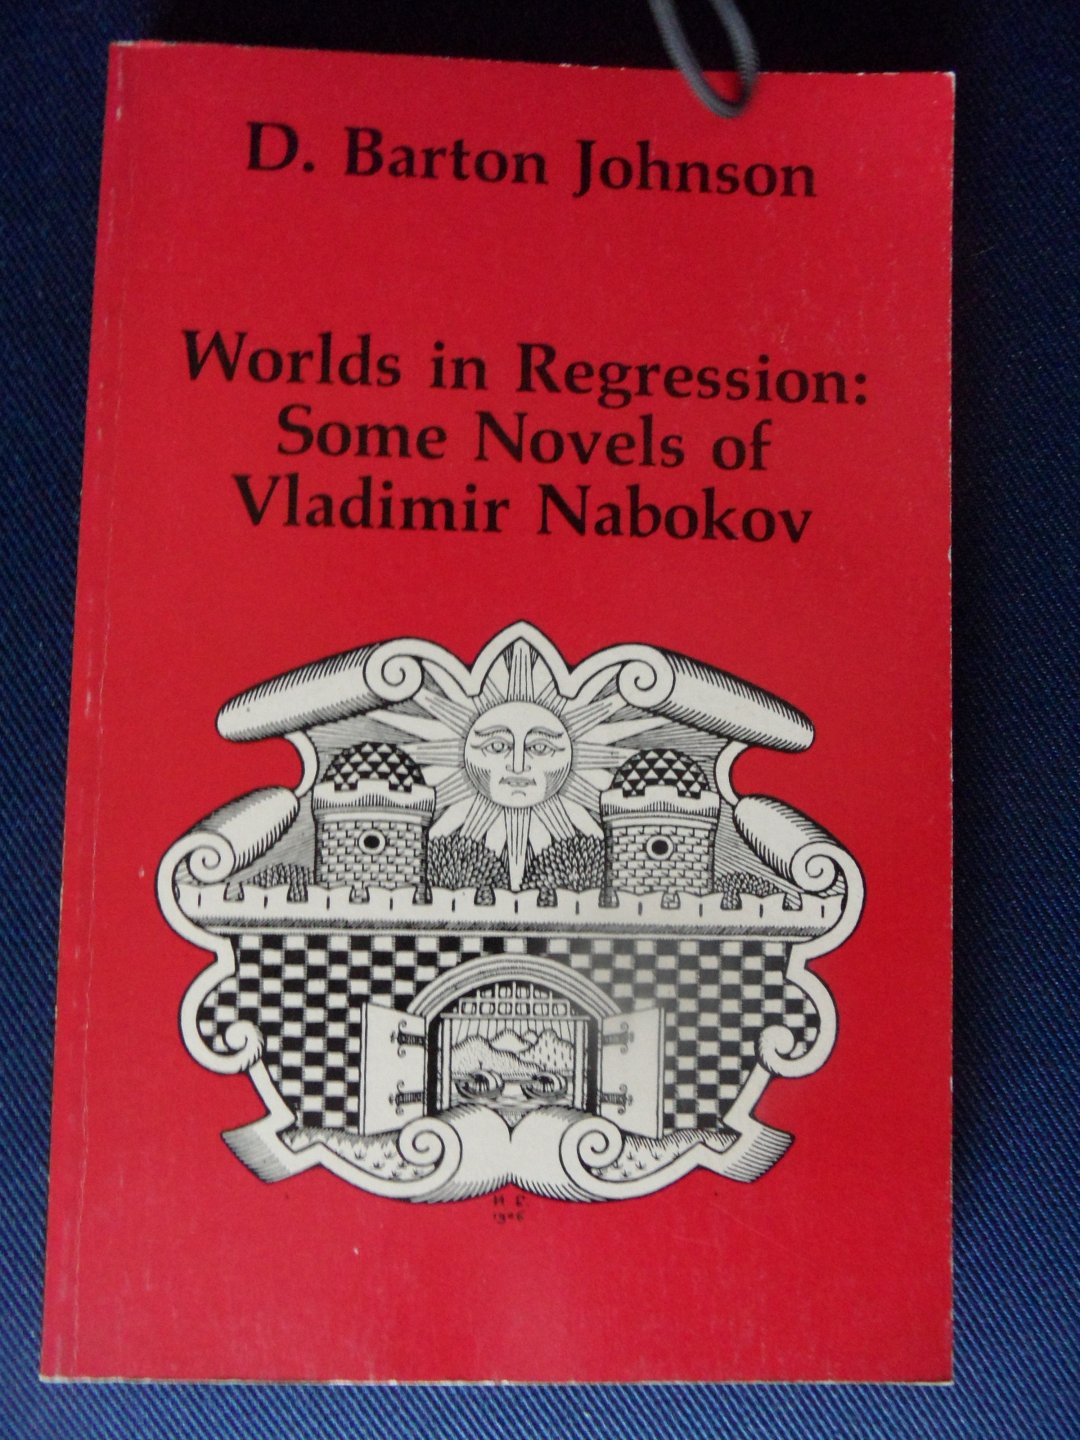 Barton Johnson, D. - Worlds in Regression: some novels of Vladimir Nabokov